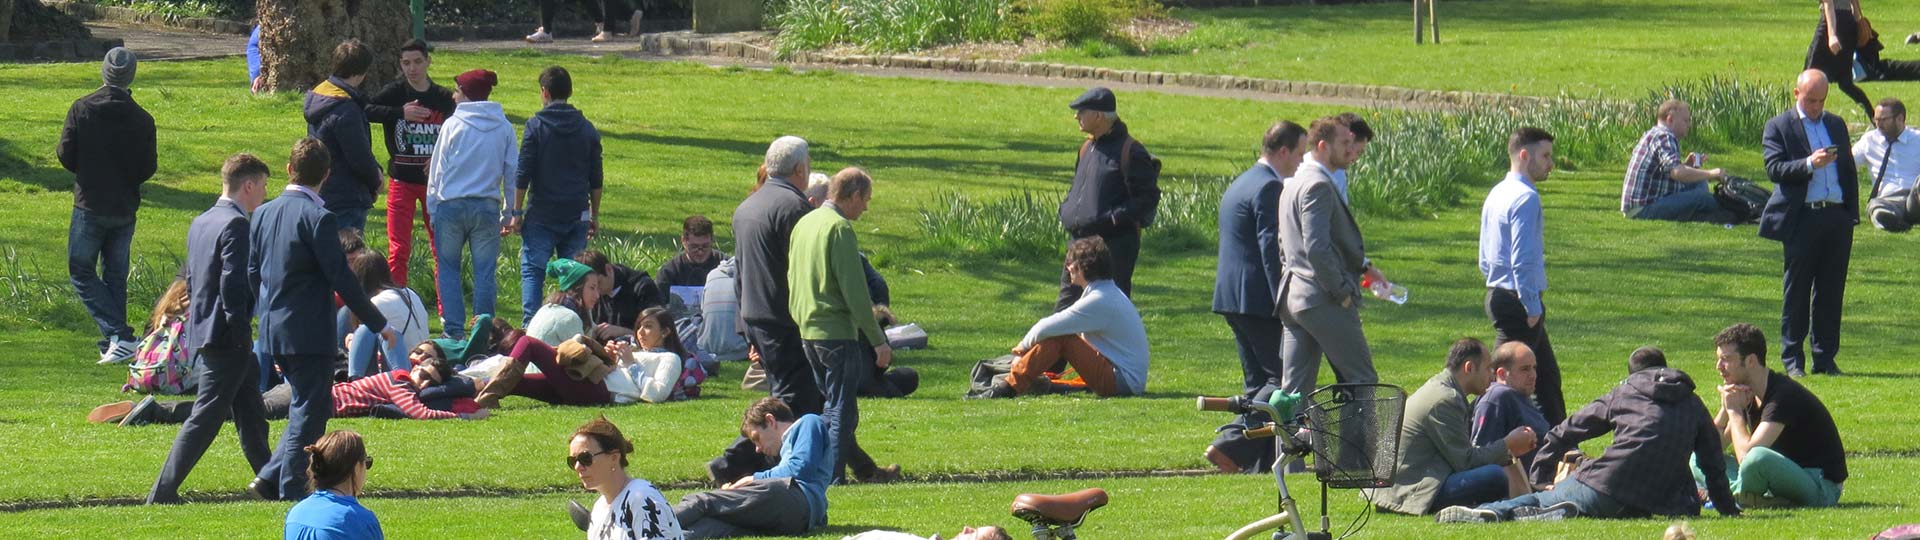 Dublin park people relaxing